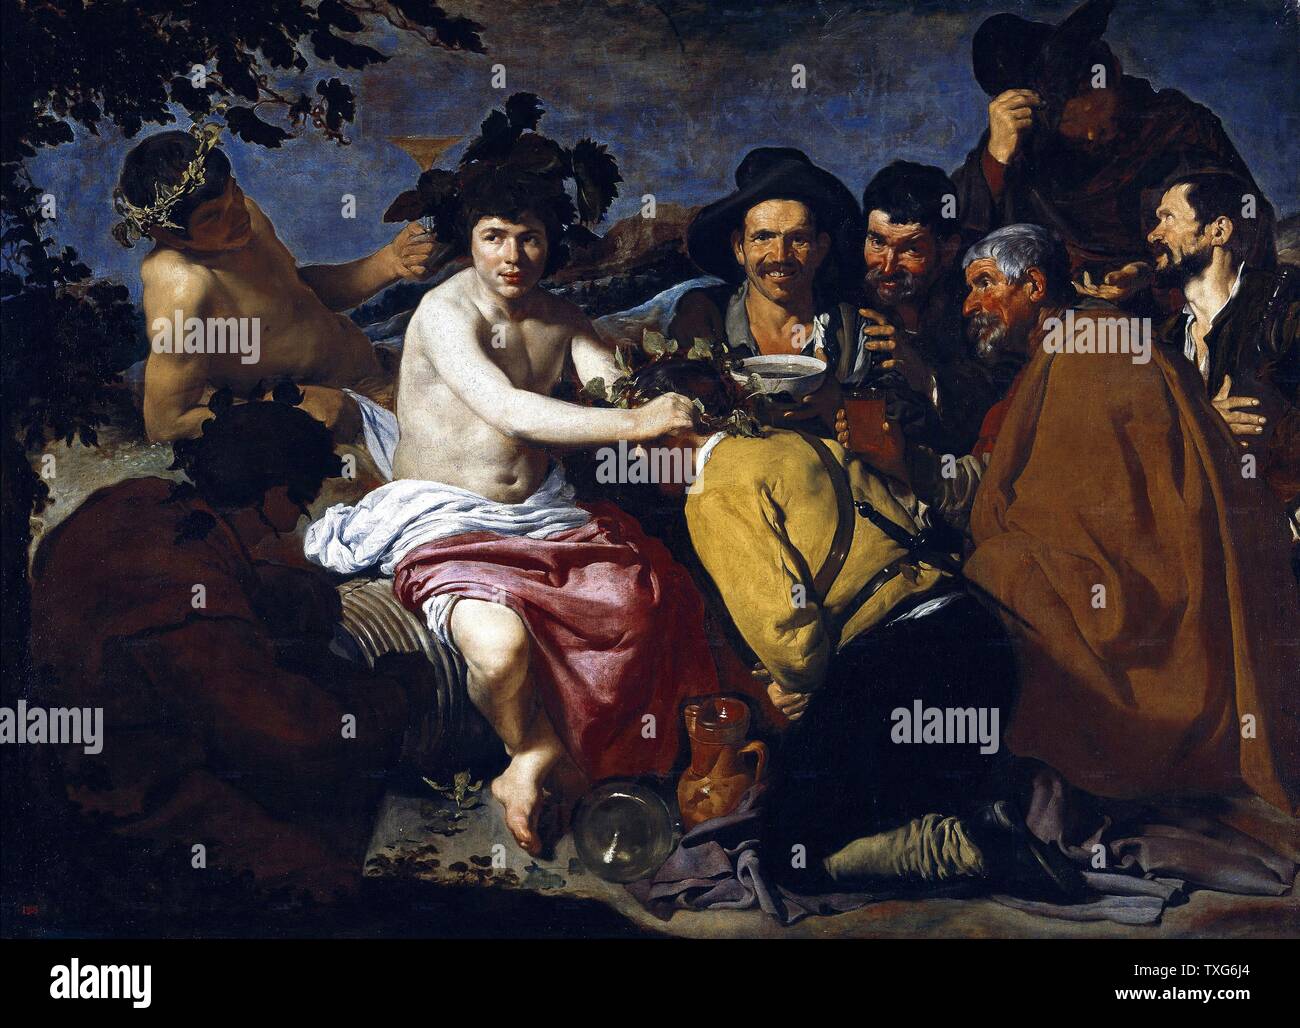 Diego Velázquez Spanisch Schule der Triumph des Bacchus oder die Betrunkenen El Triunfo de Baco, o Los Borrachos 1628-1629 Öl auf Leinwand (165 x 225 cm) Madrid, Museo del Prado Stockfoto